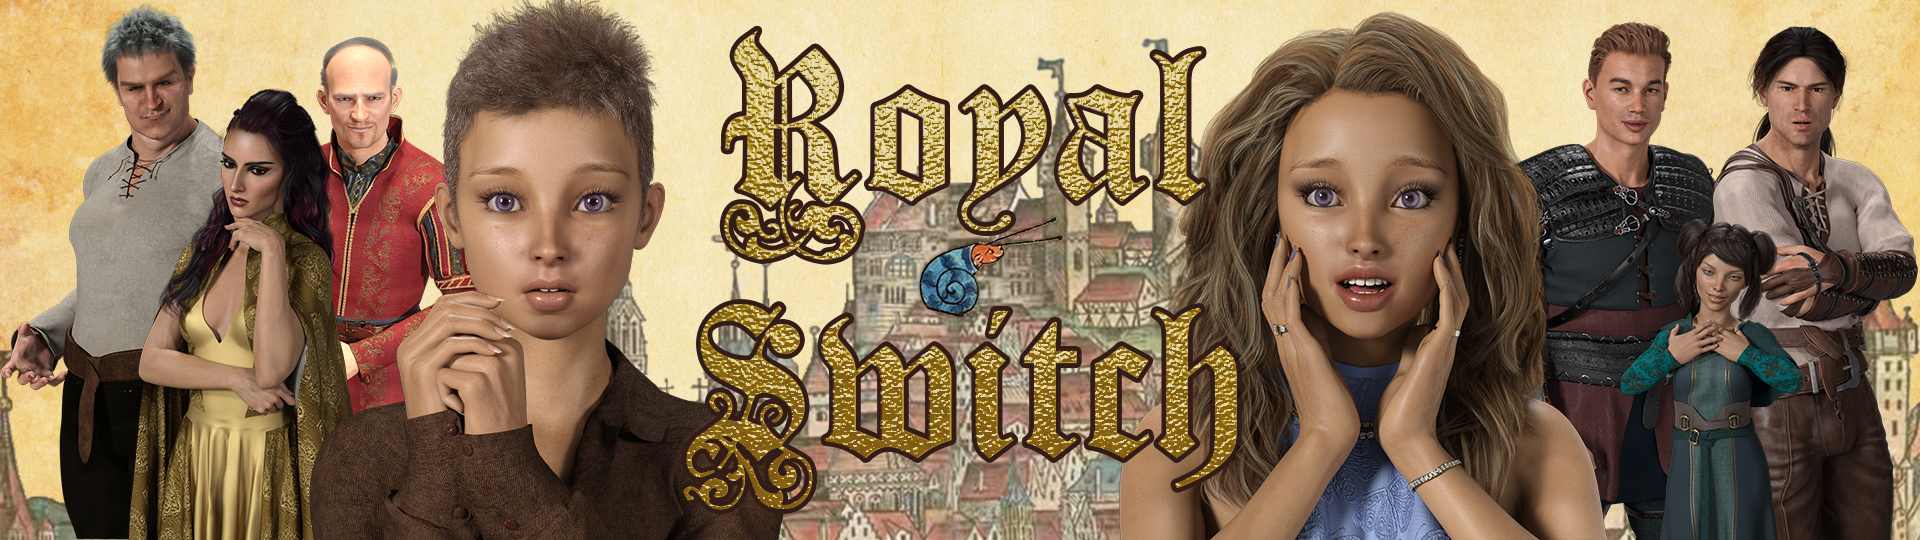 Royal Switch [DeepBauhaus] Adult xxx Game Download